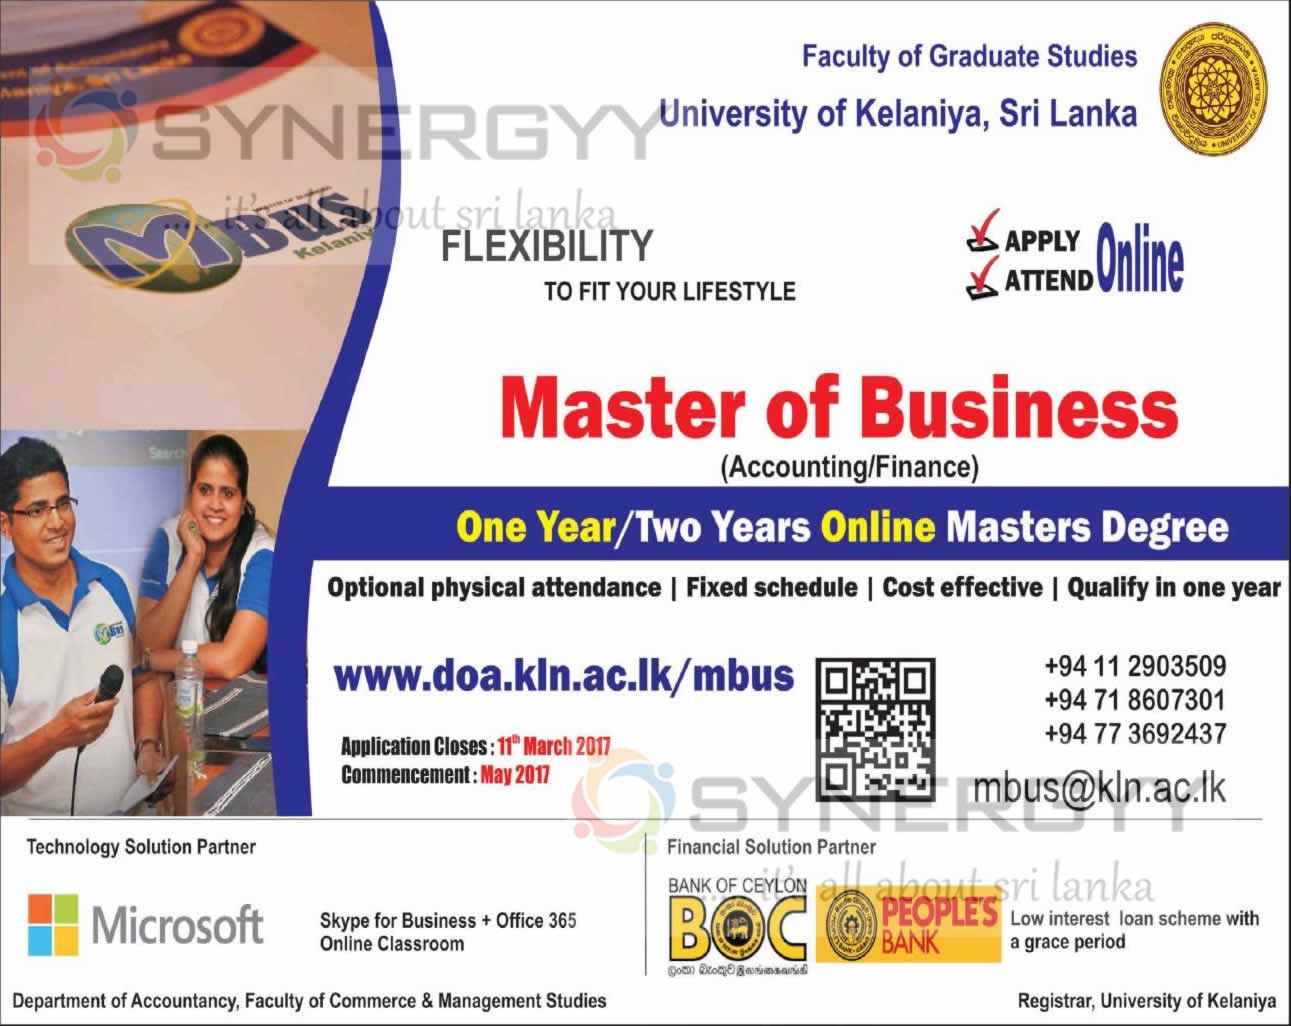 Master of Business (Accounting Finance) Online degree by University of Kelaniya